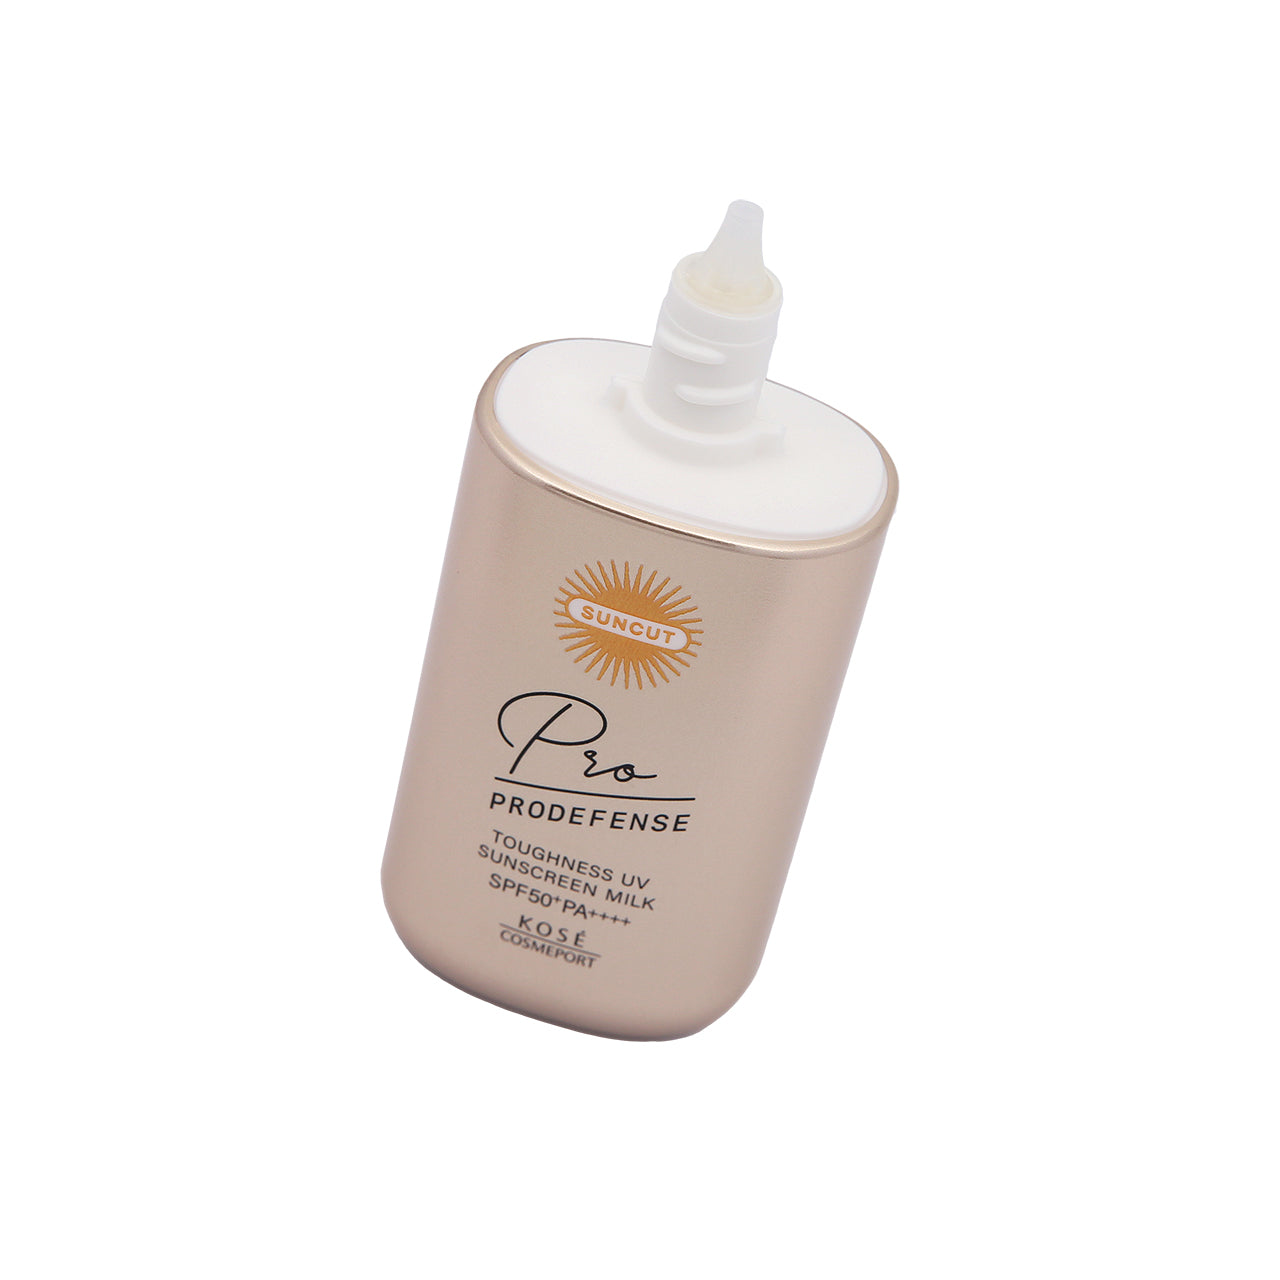 Kose Cosmeport Suncut Prodefense Toughness UV Sunscreen Milk SPF50+ PA++++ 60ml